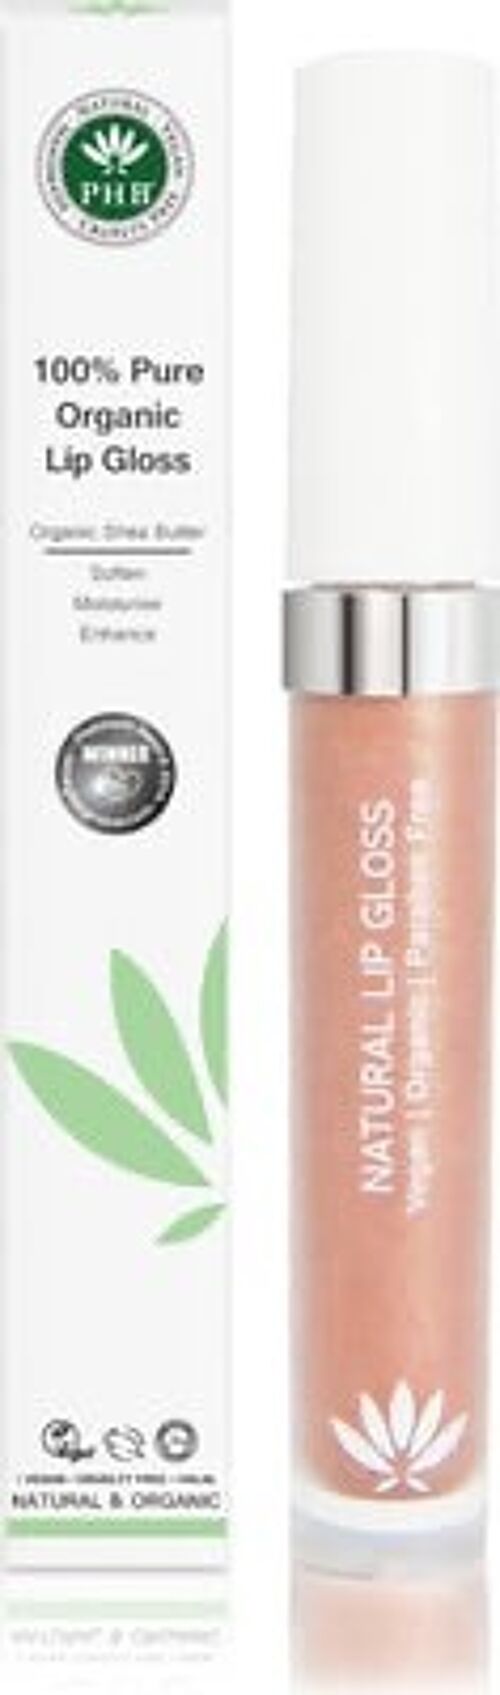 Pure Organic Lip Gloss Blossom